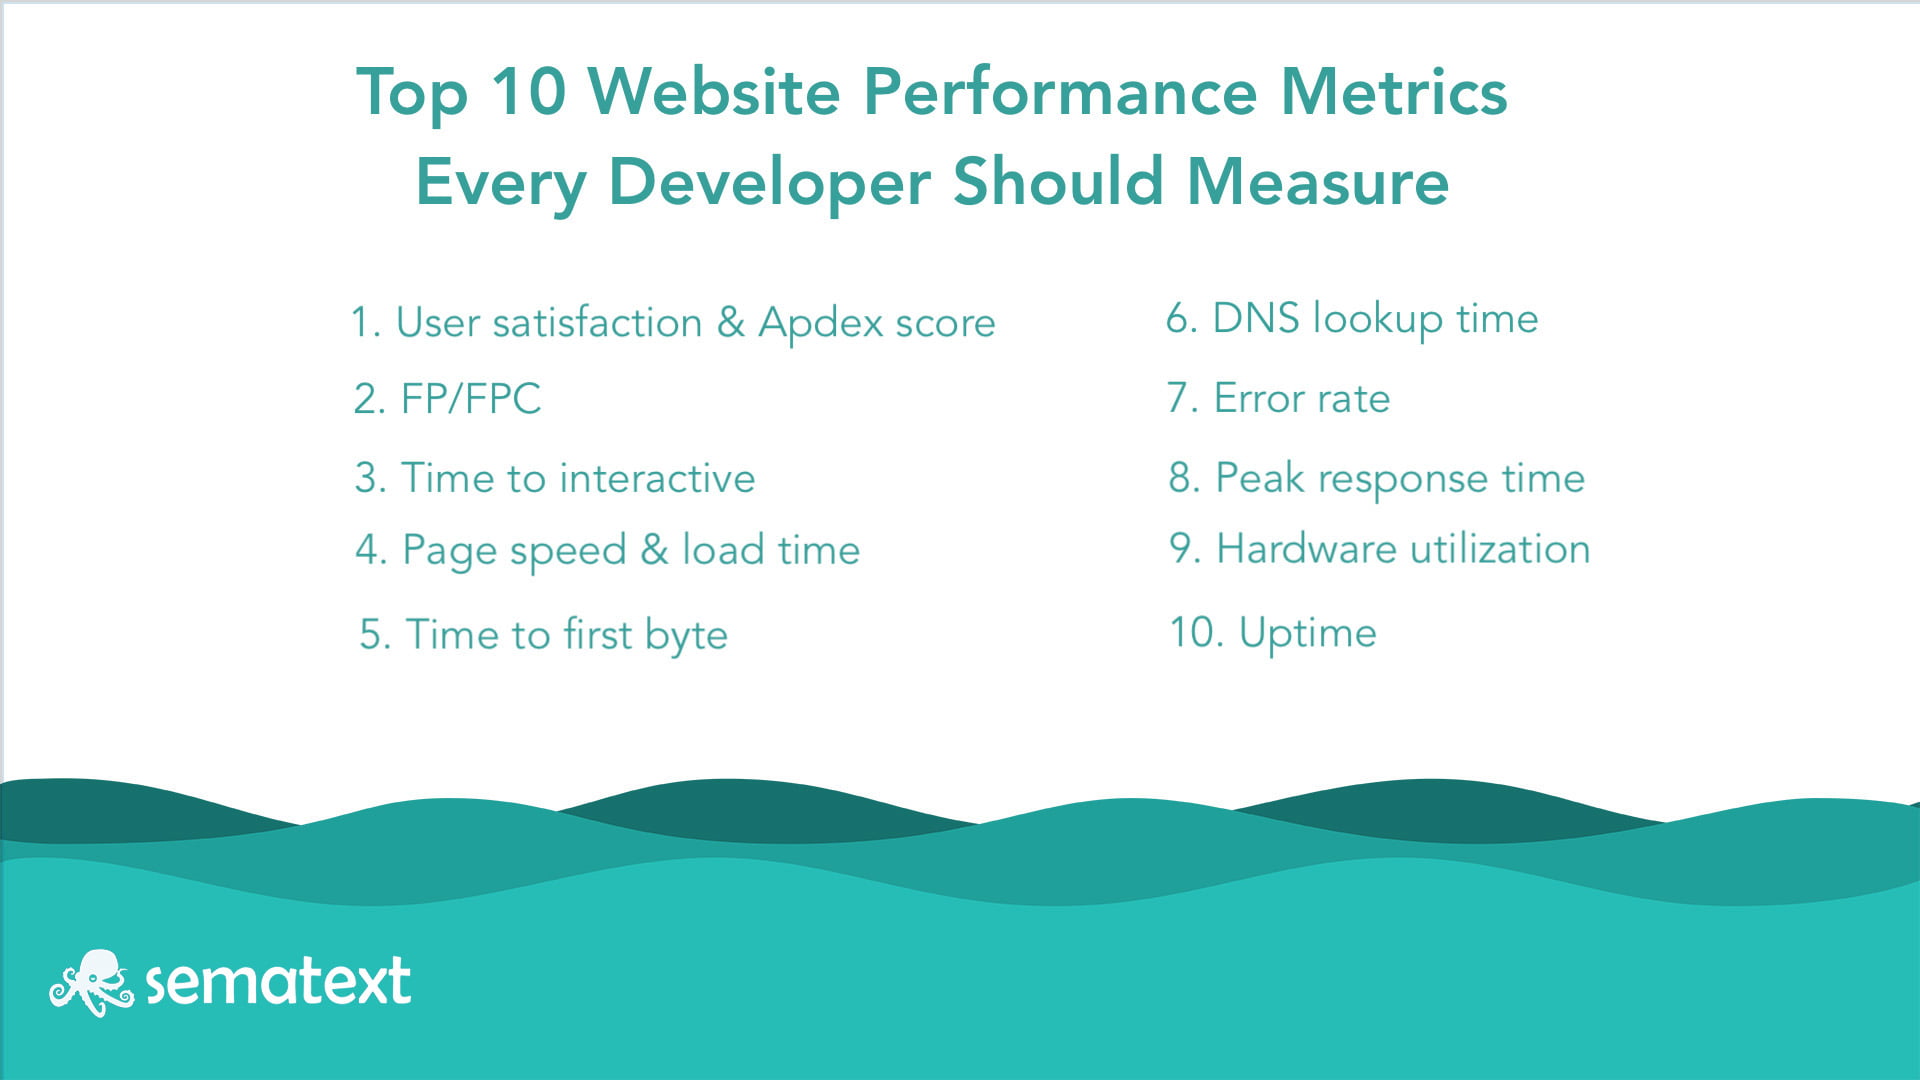 key metrics to measure website performance